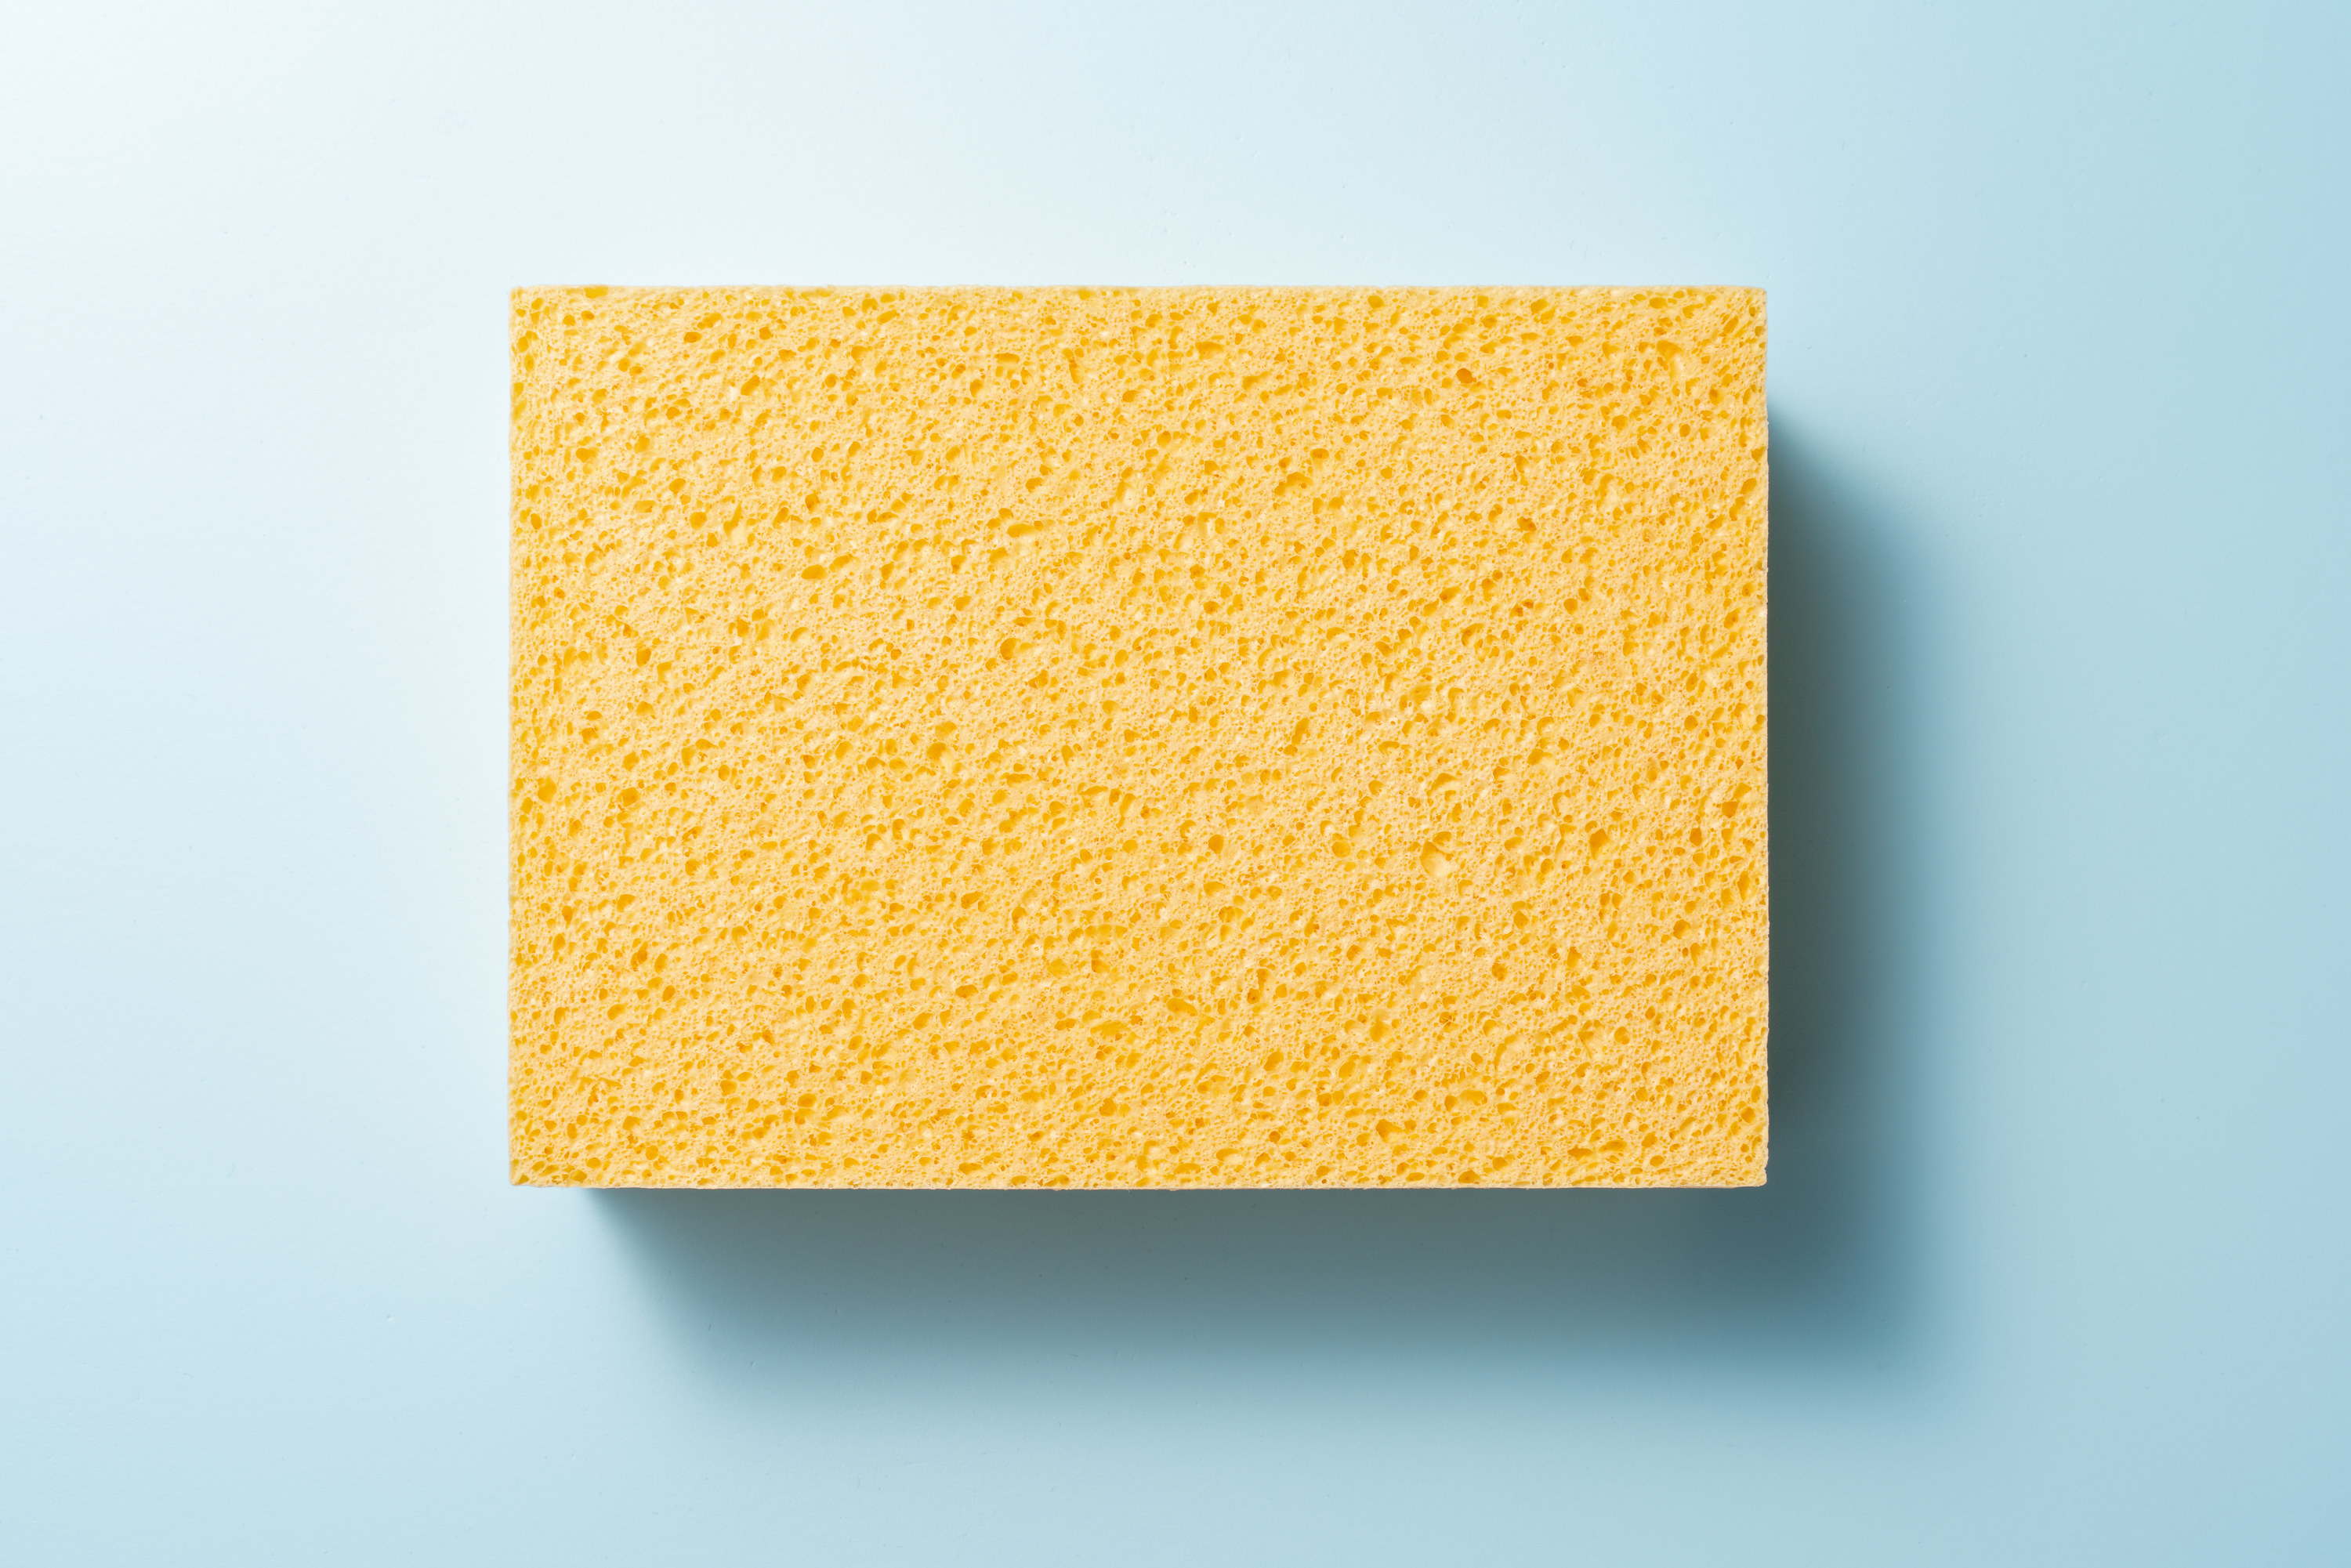 a yellow sponge